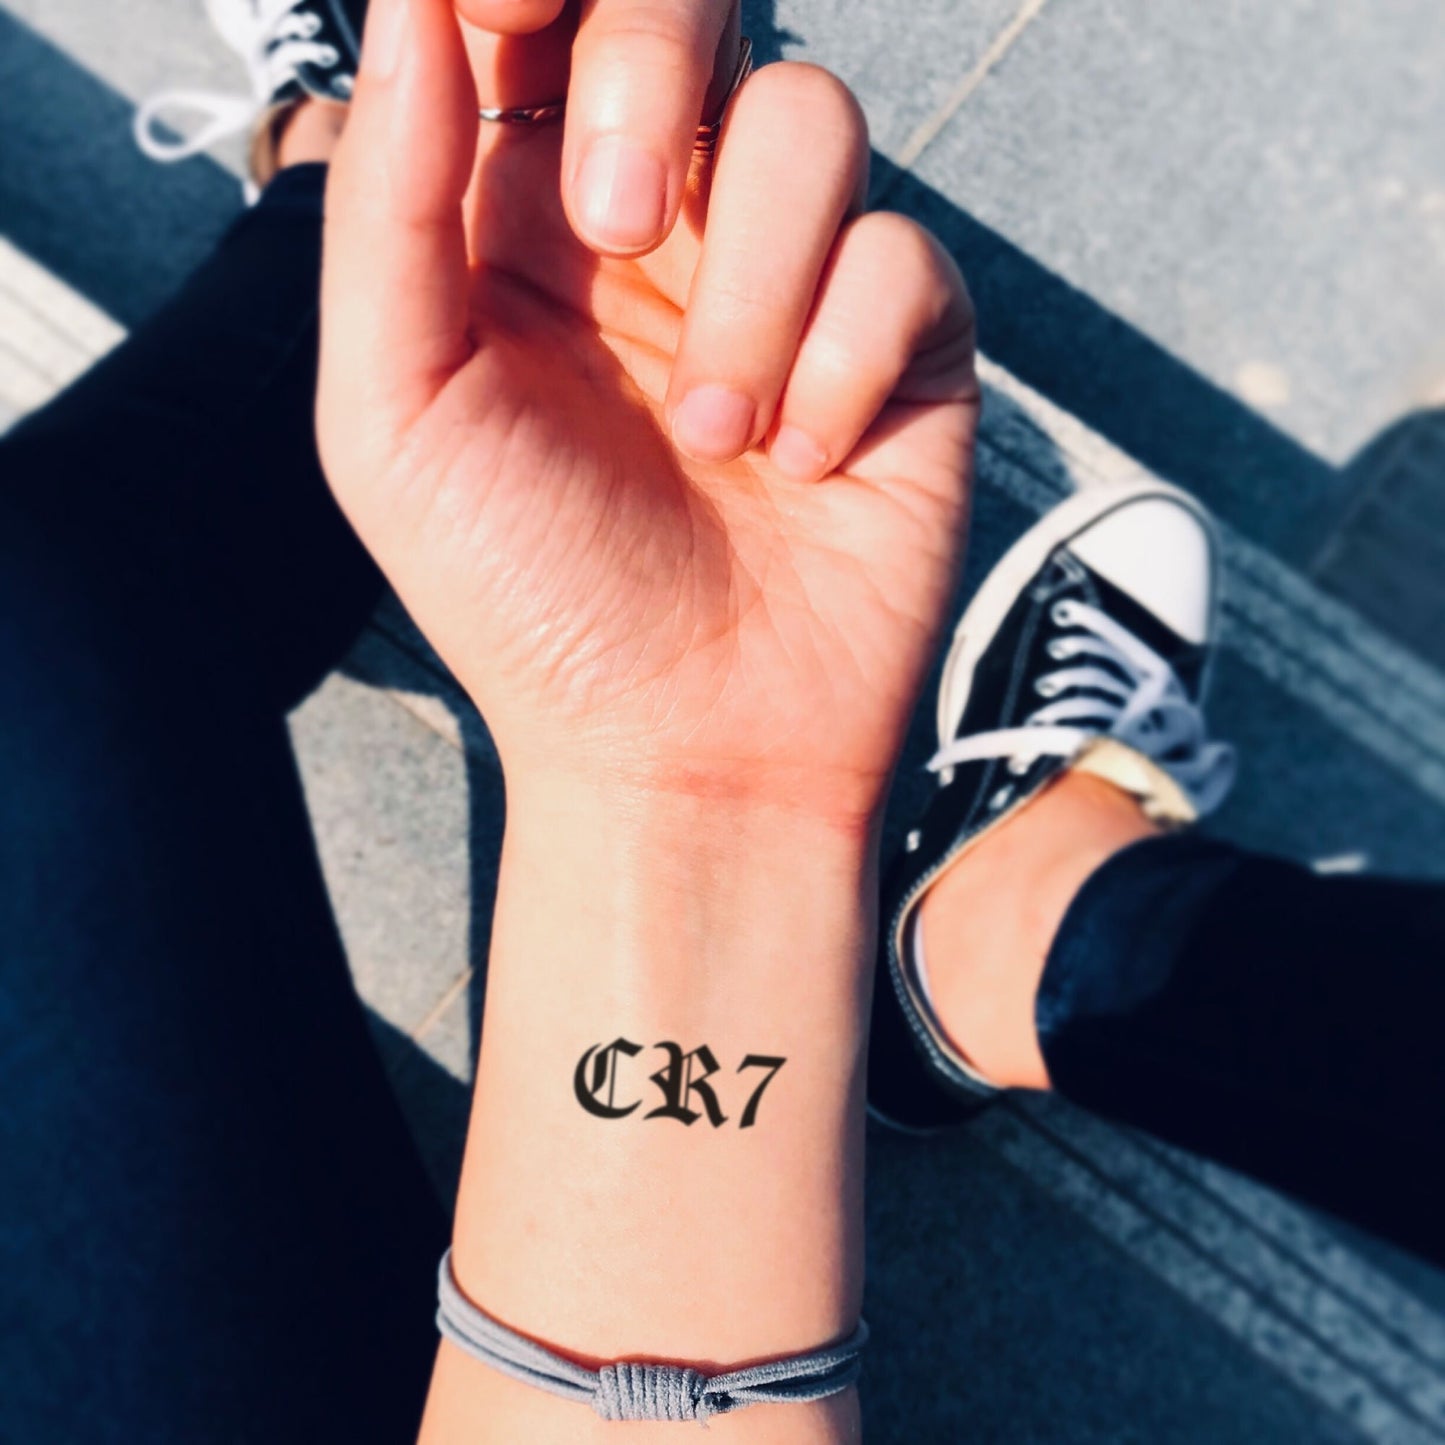 CR7 Temporary Tattoo Sticker - OhMyTat